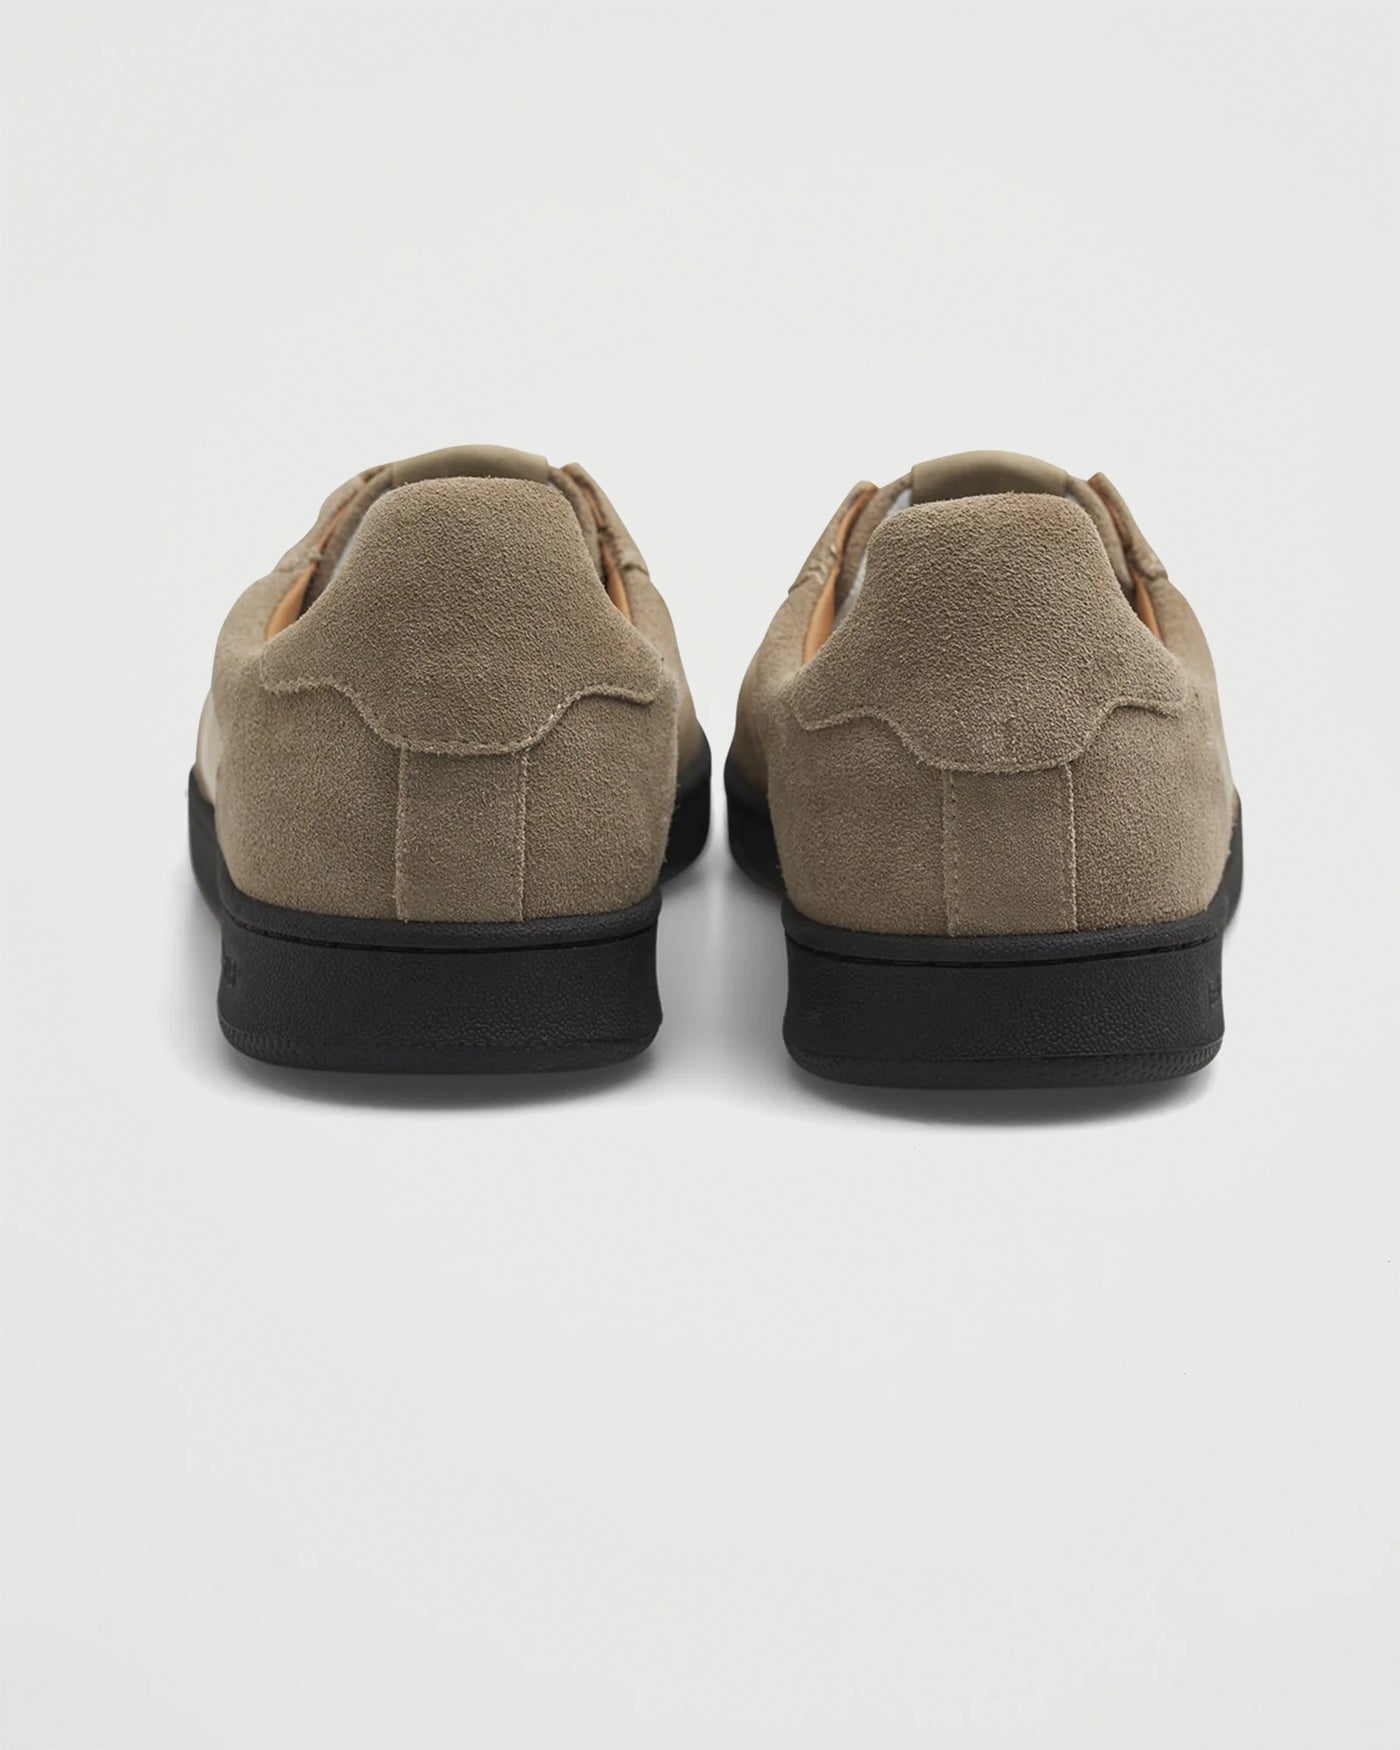 Last Resort AB CM001 Suede/Leather Lo Safari/Black Shoes Sneakers Unisex